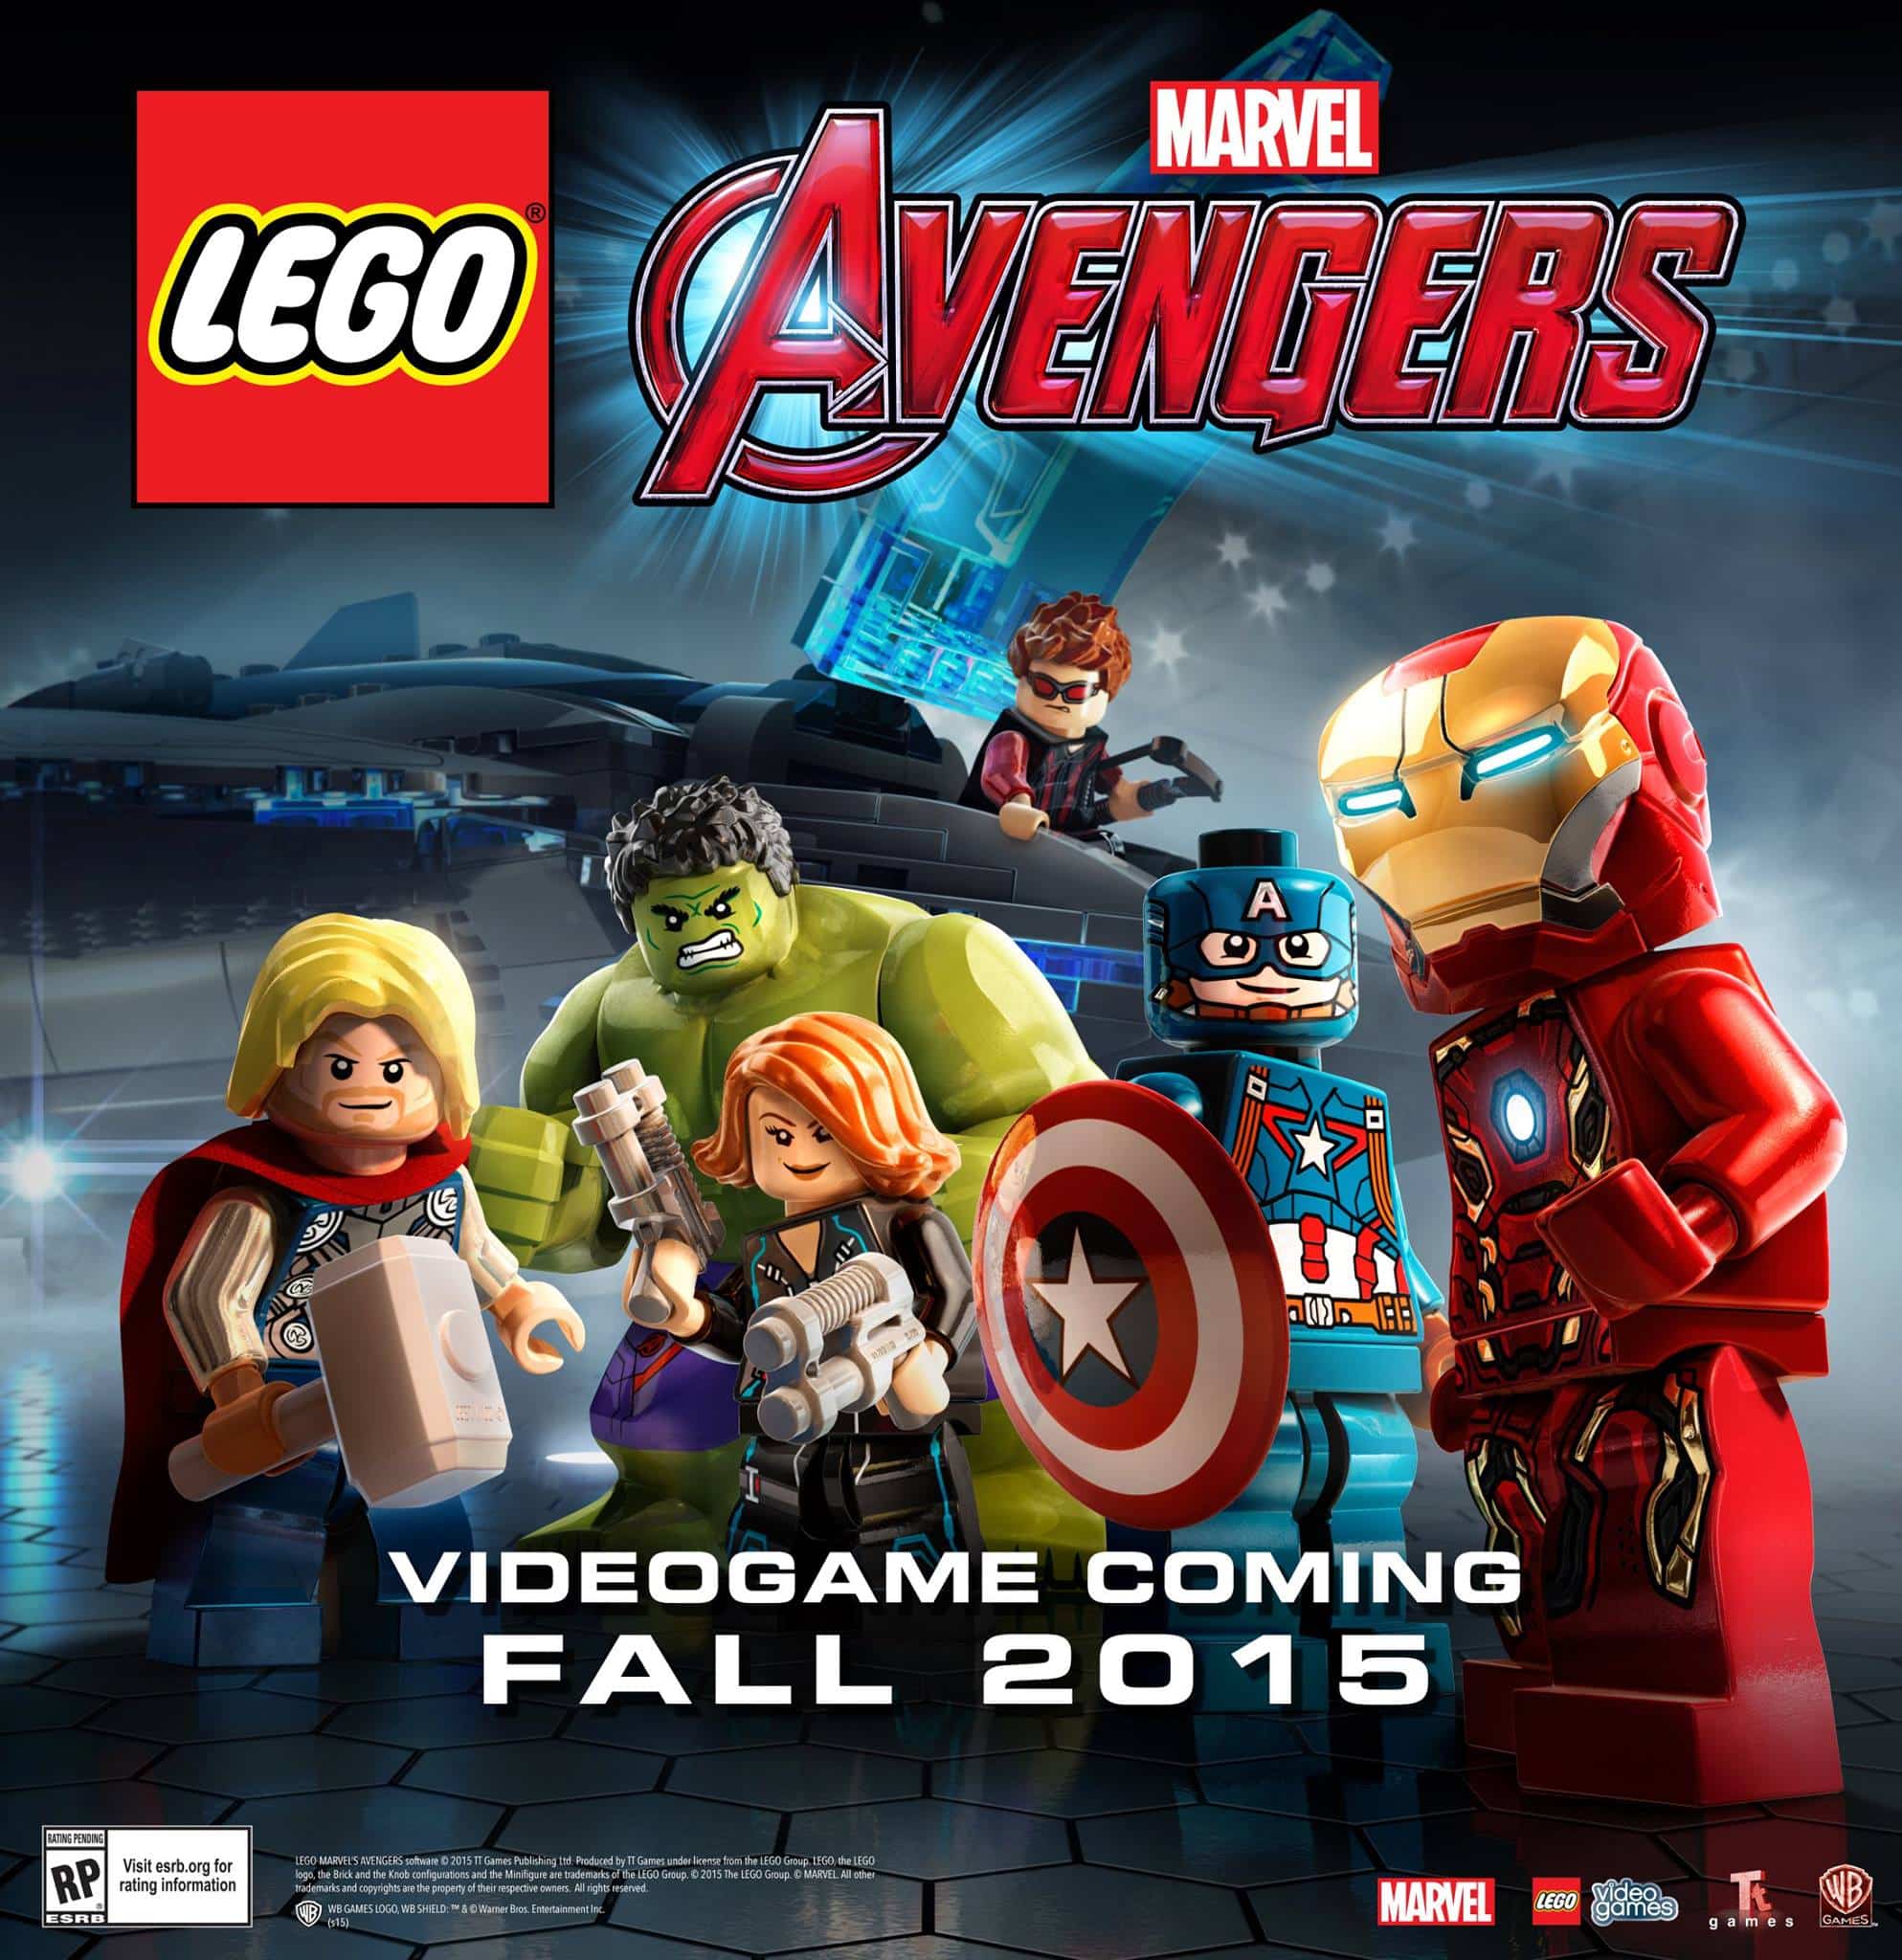 Lego Marvel's Avengers video game image